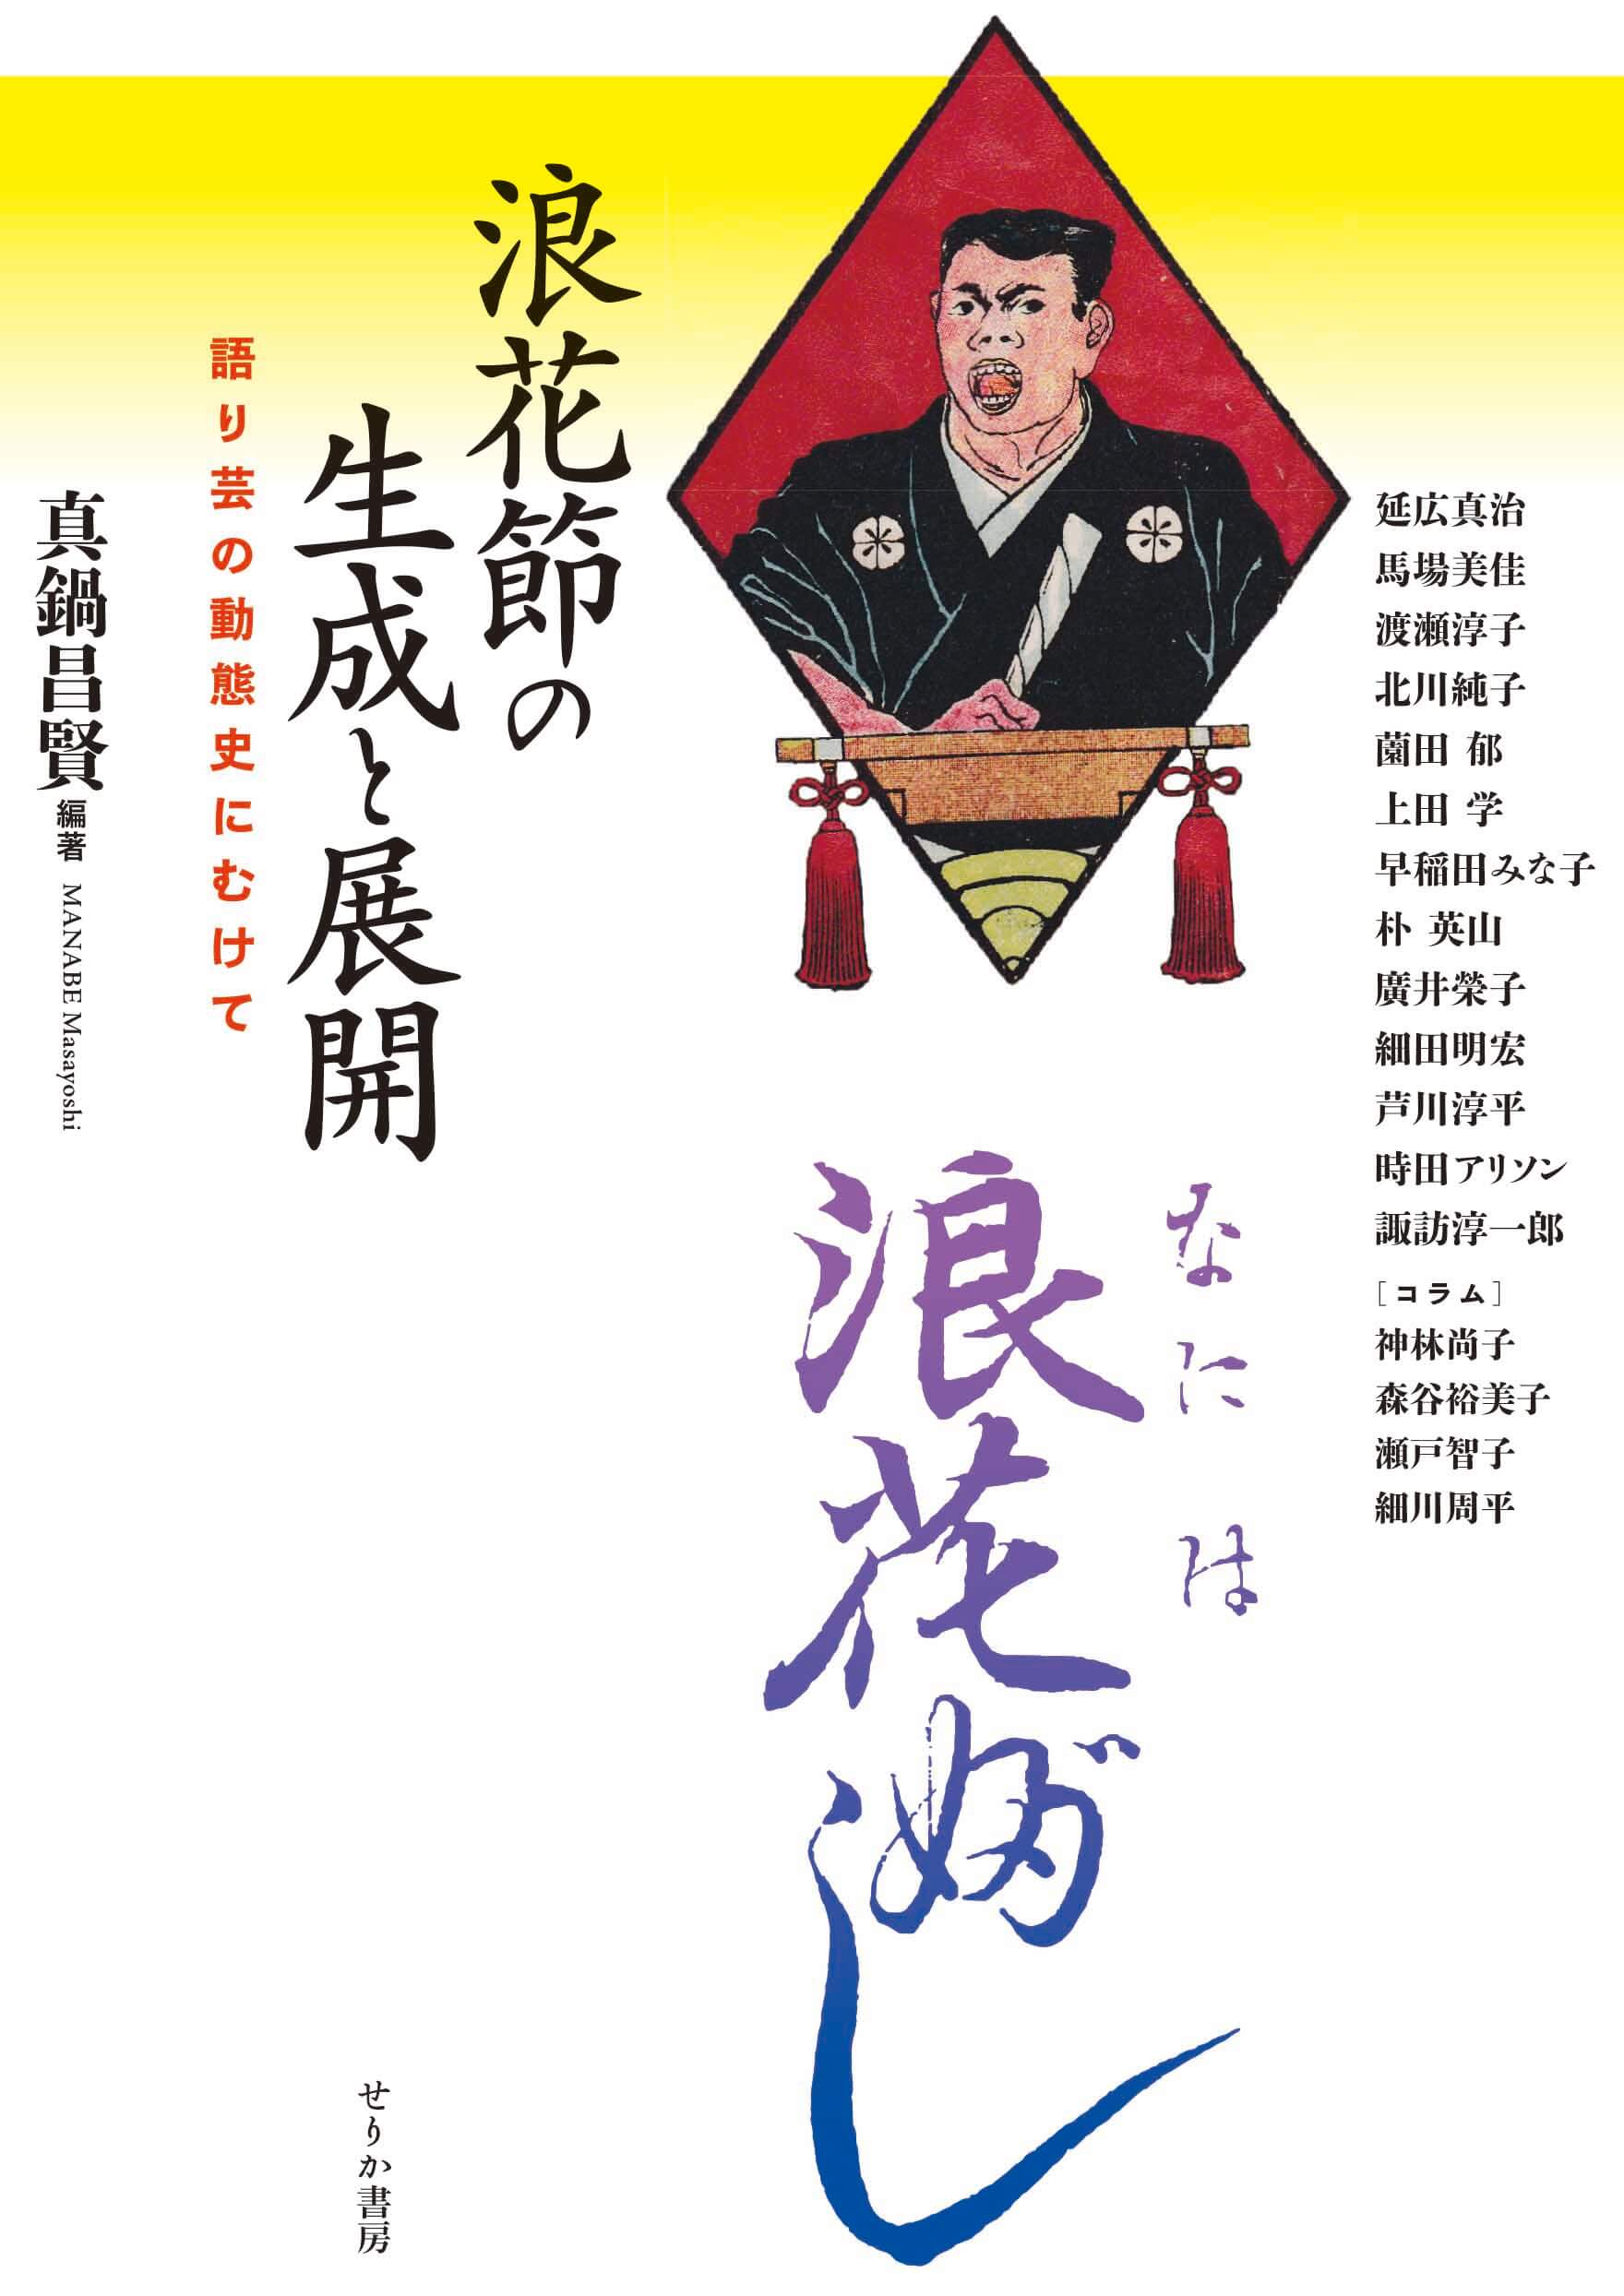 Naniwabushi no seisei to tenkai: Katari gei no dōtaishi ni mukete <span>(The Formation and Development of Naniwabushi: Toward a Chronicle of the Dynamics of a Narrative Art)</span>